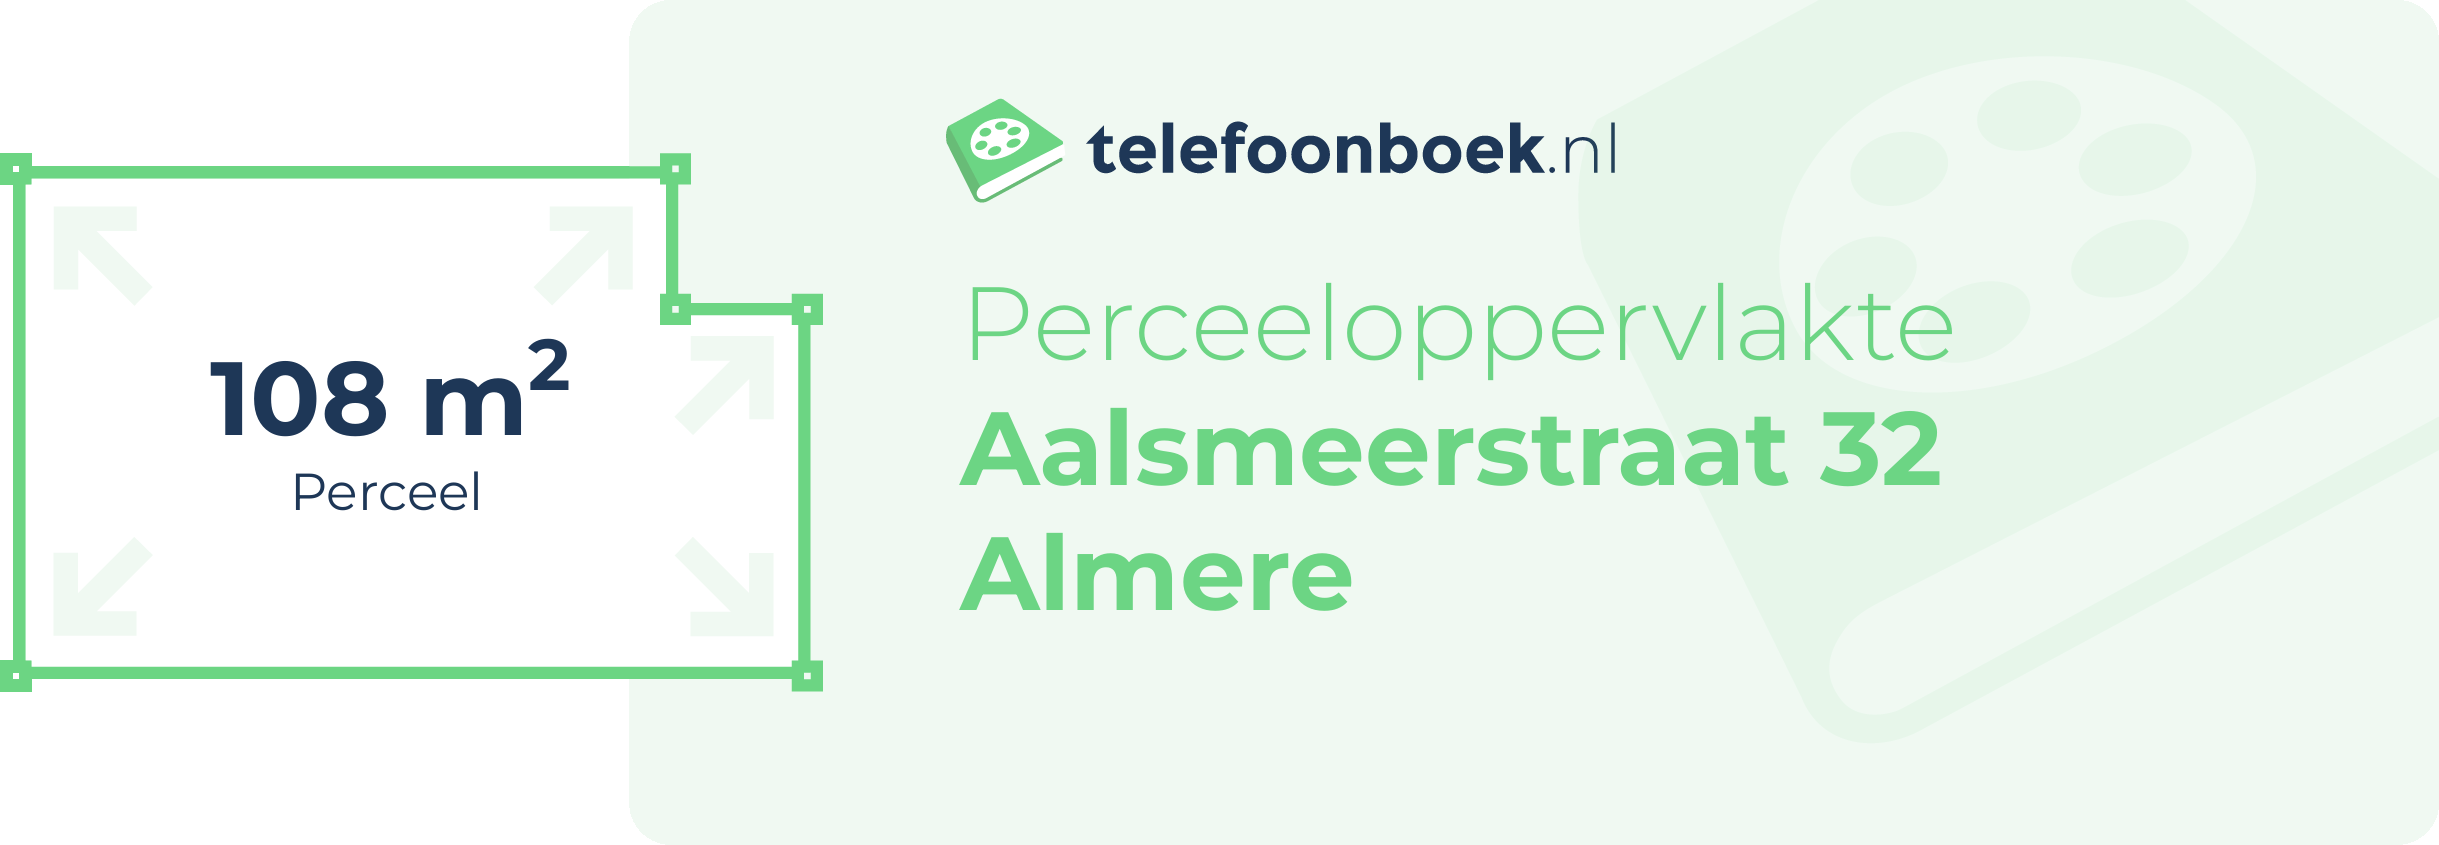 Perceeloppervlakte Aalsmeerstraat 32 Almere